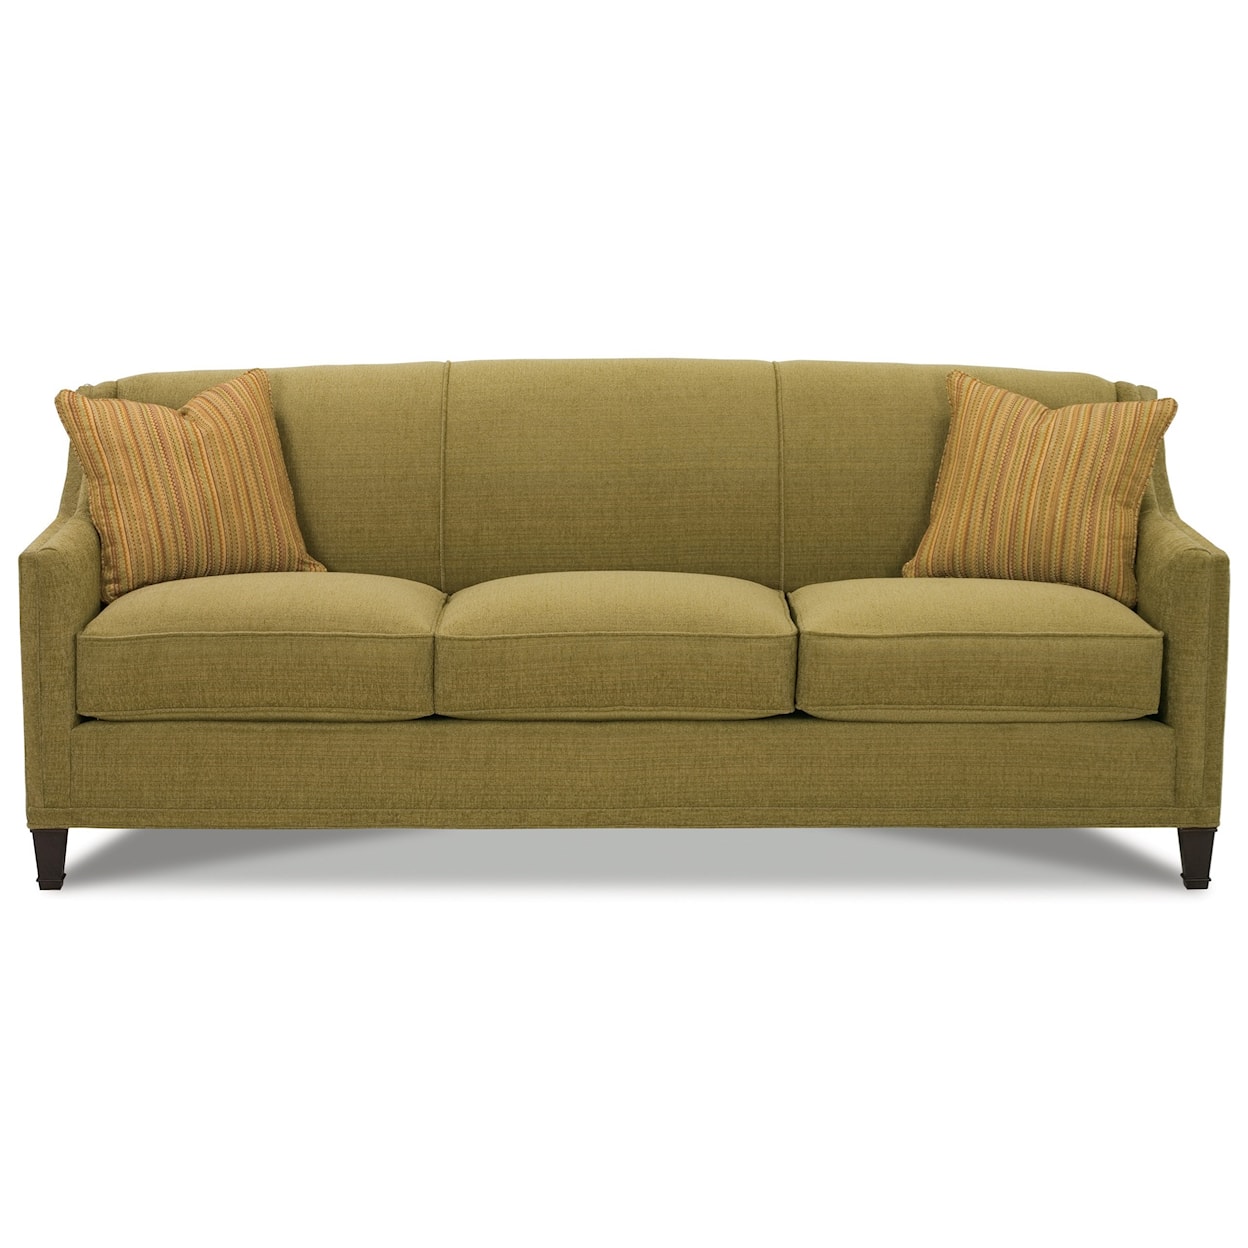 Rowe Gibson - Rockford Sofa